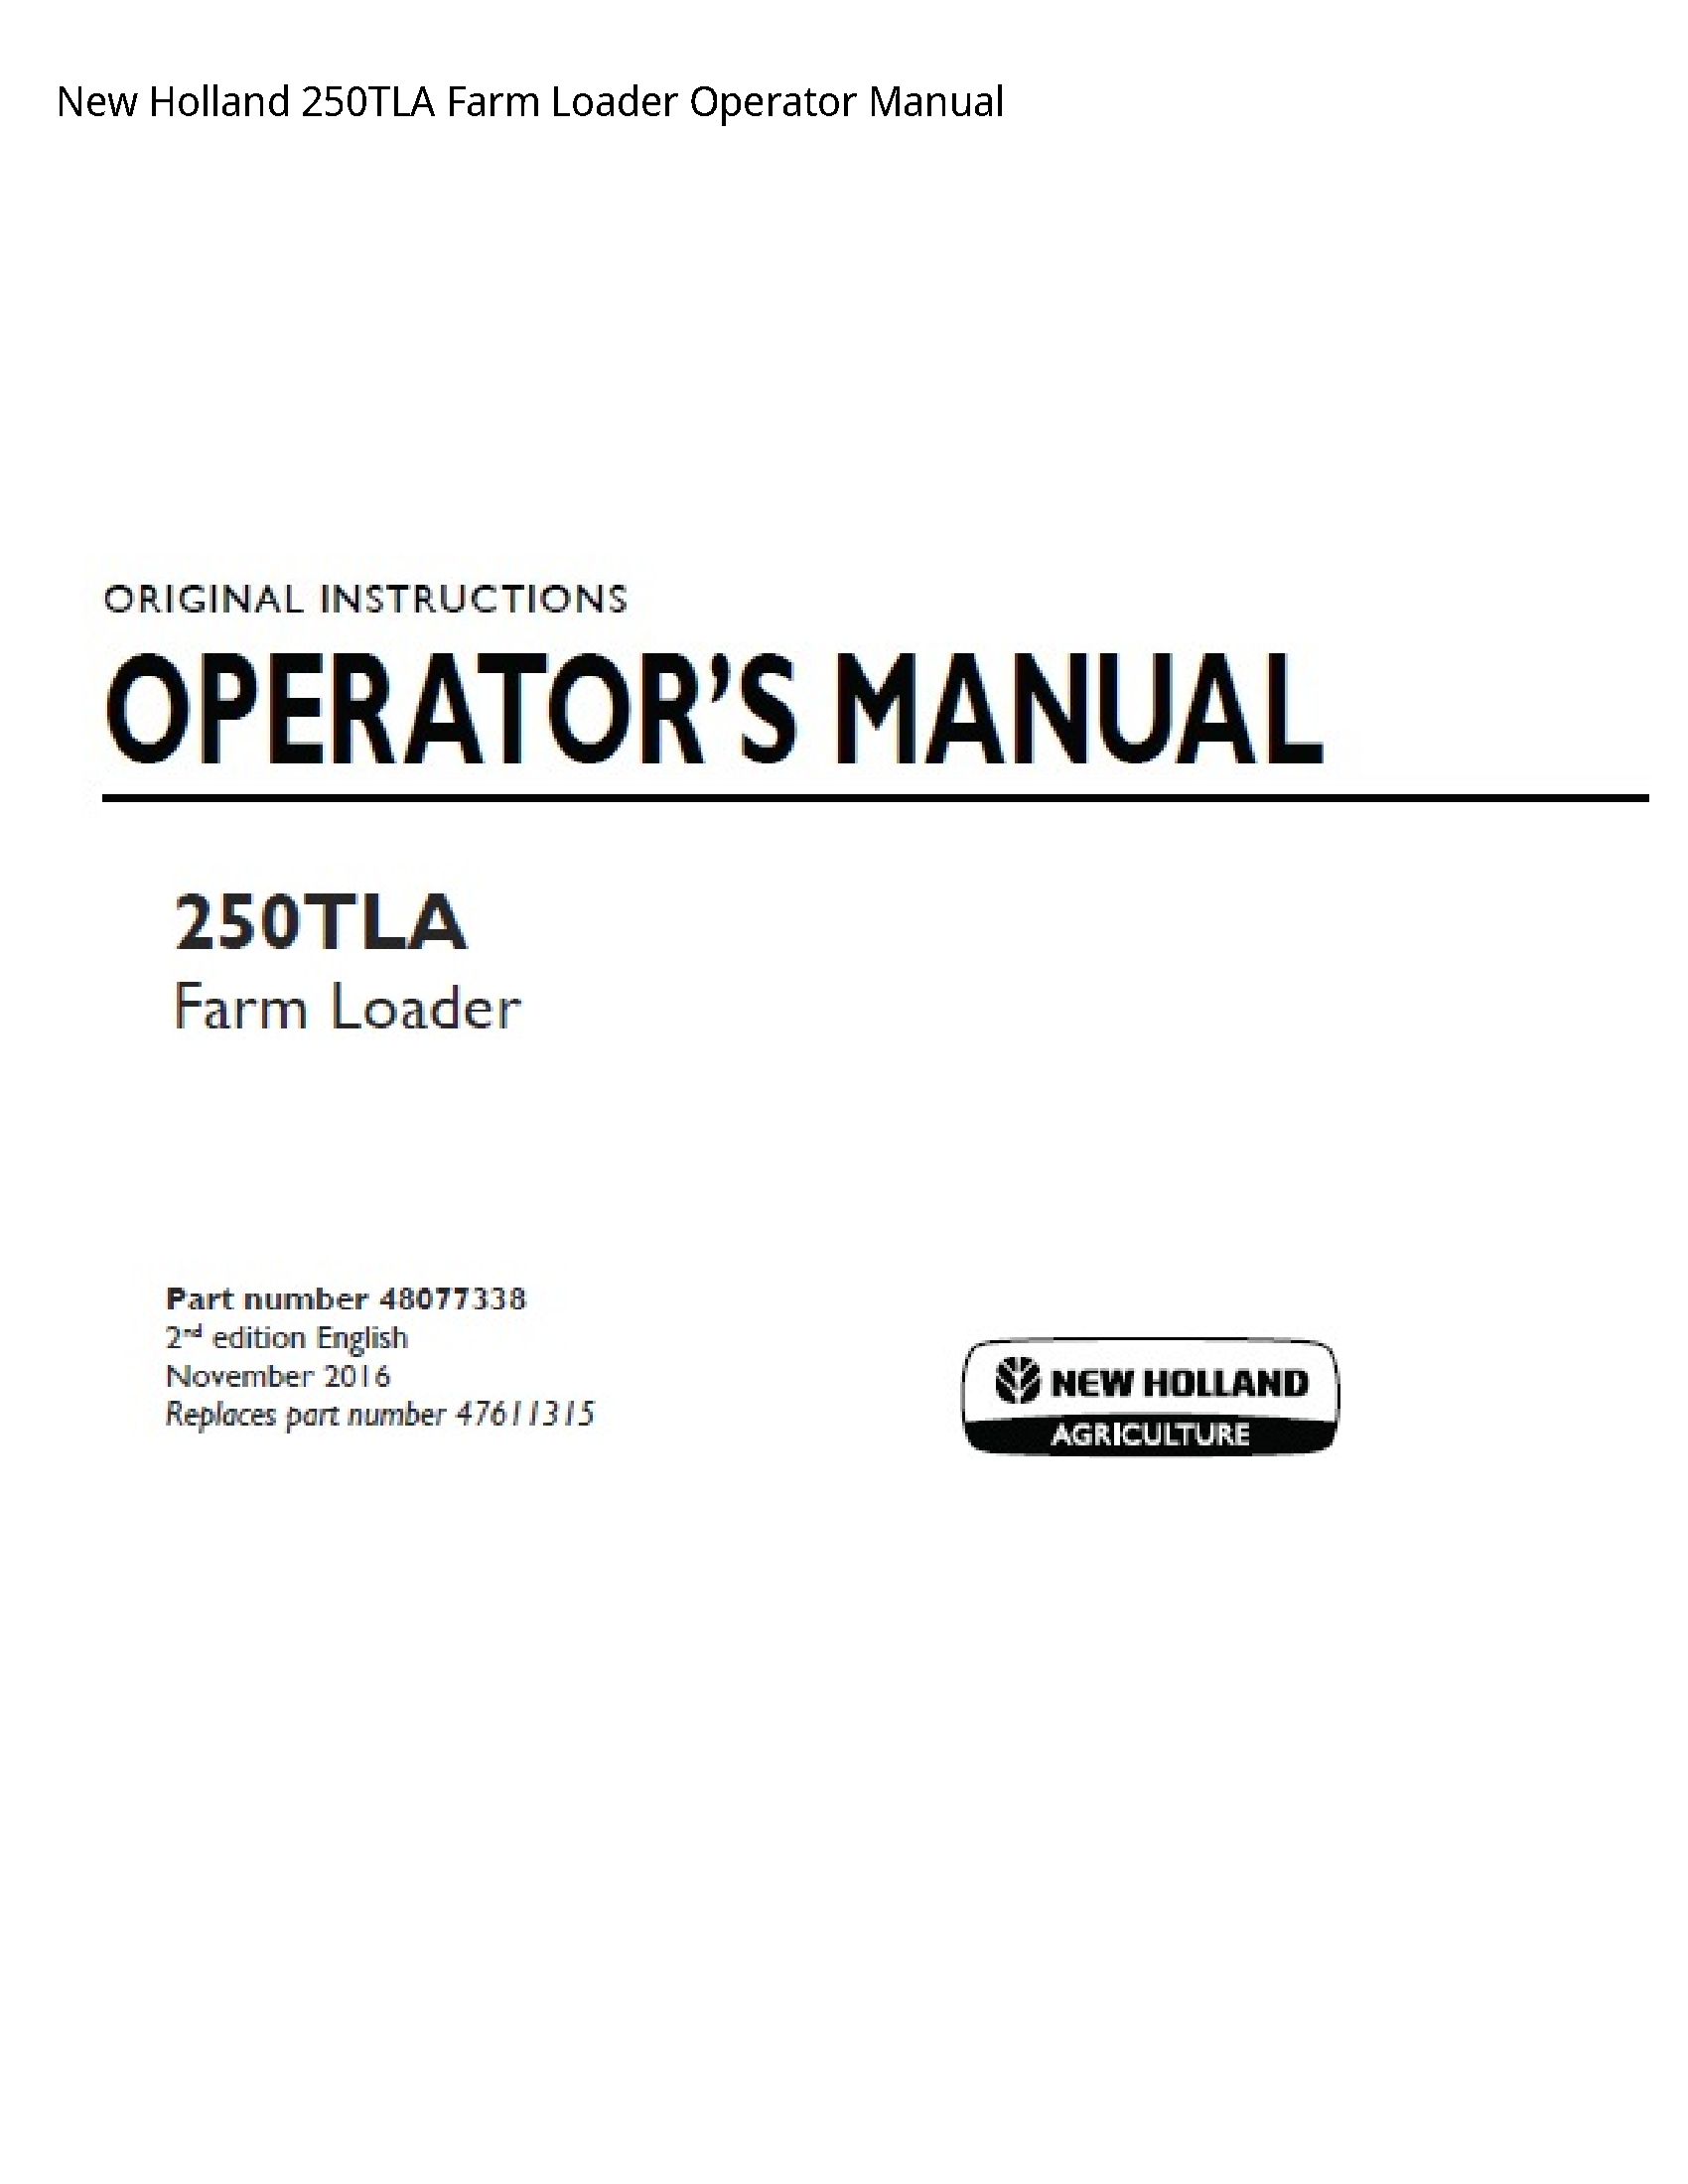 New Holland 250TLA Farm Loader Operator manual